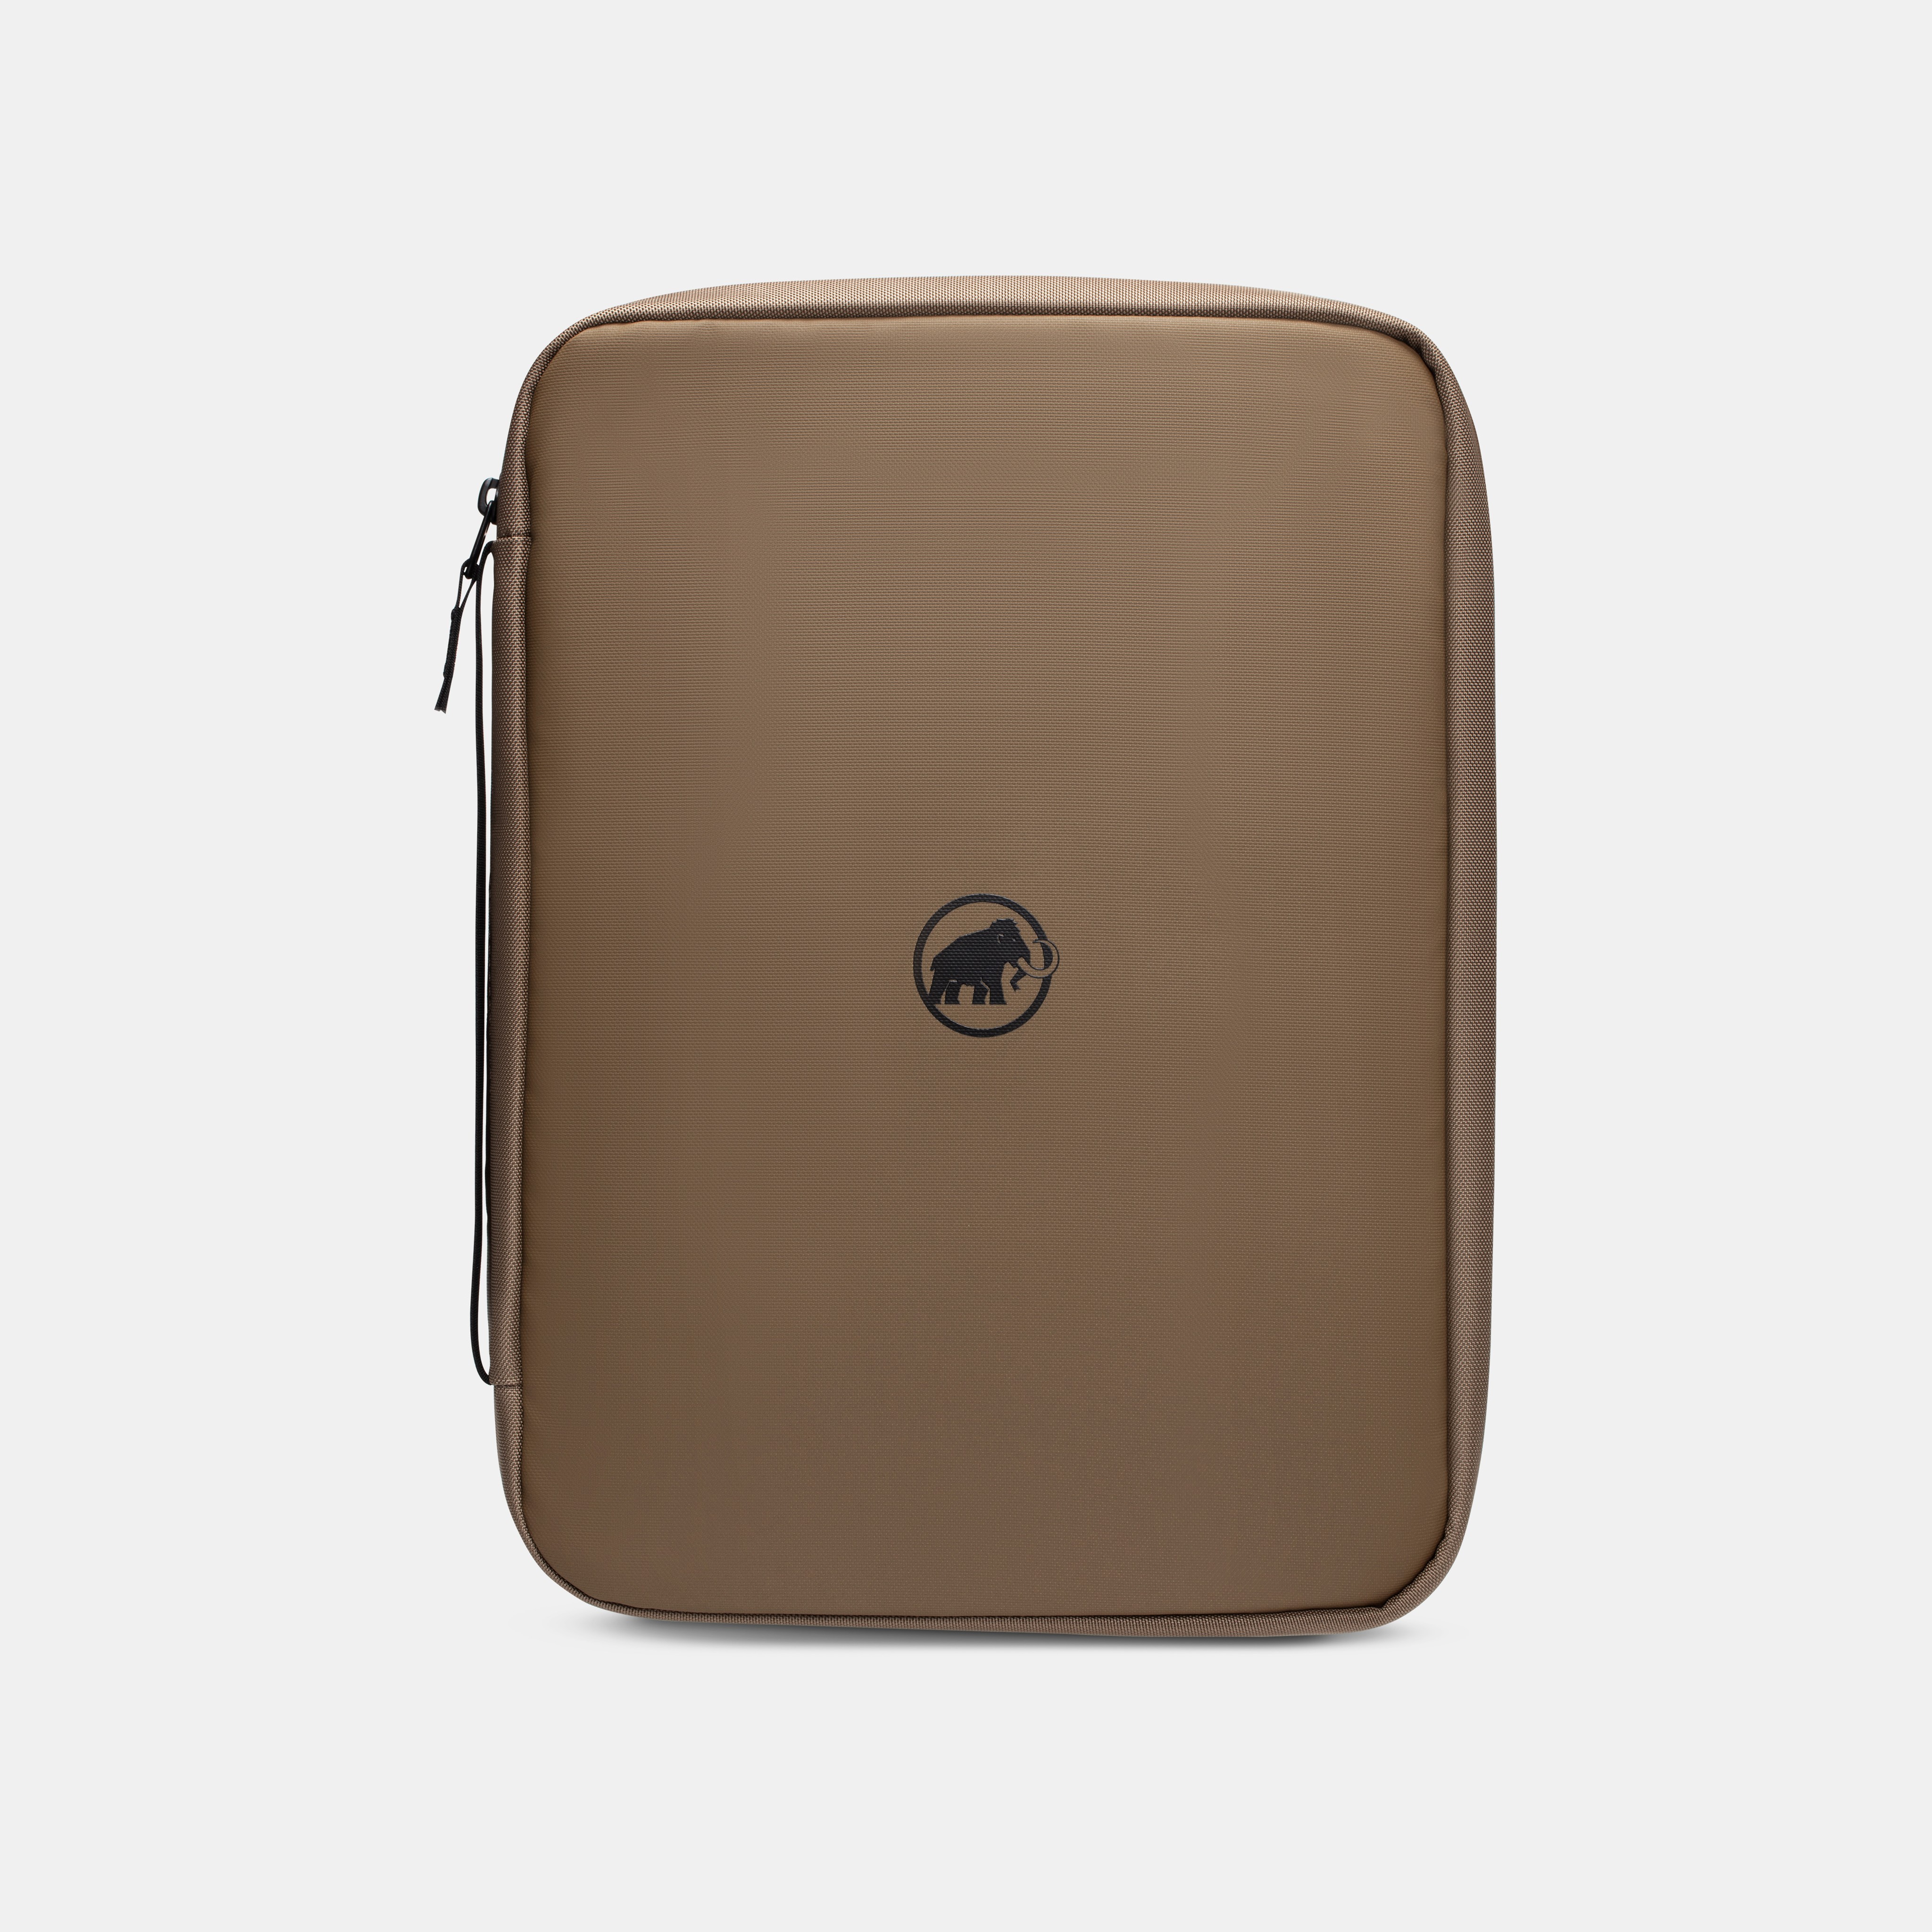 Seon Laptop Case product image